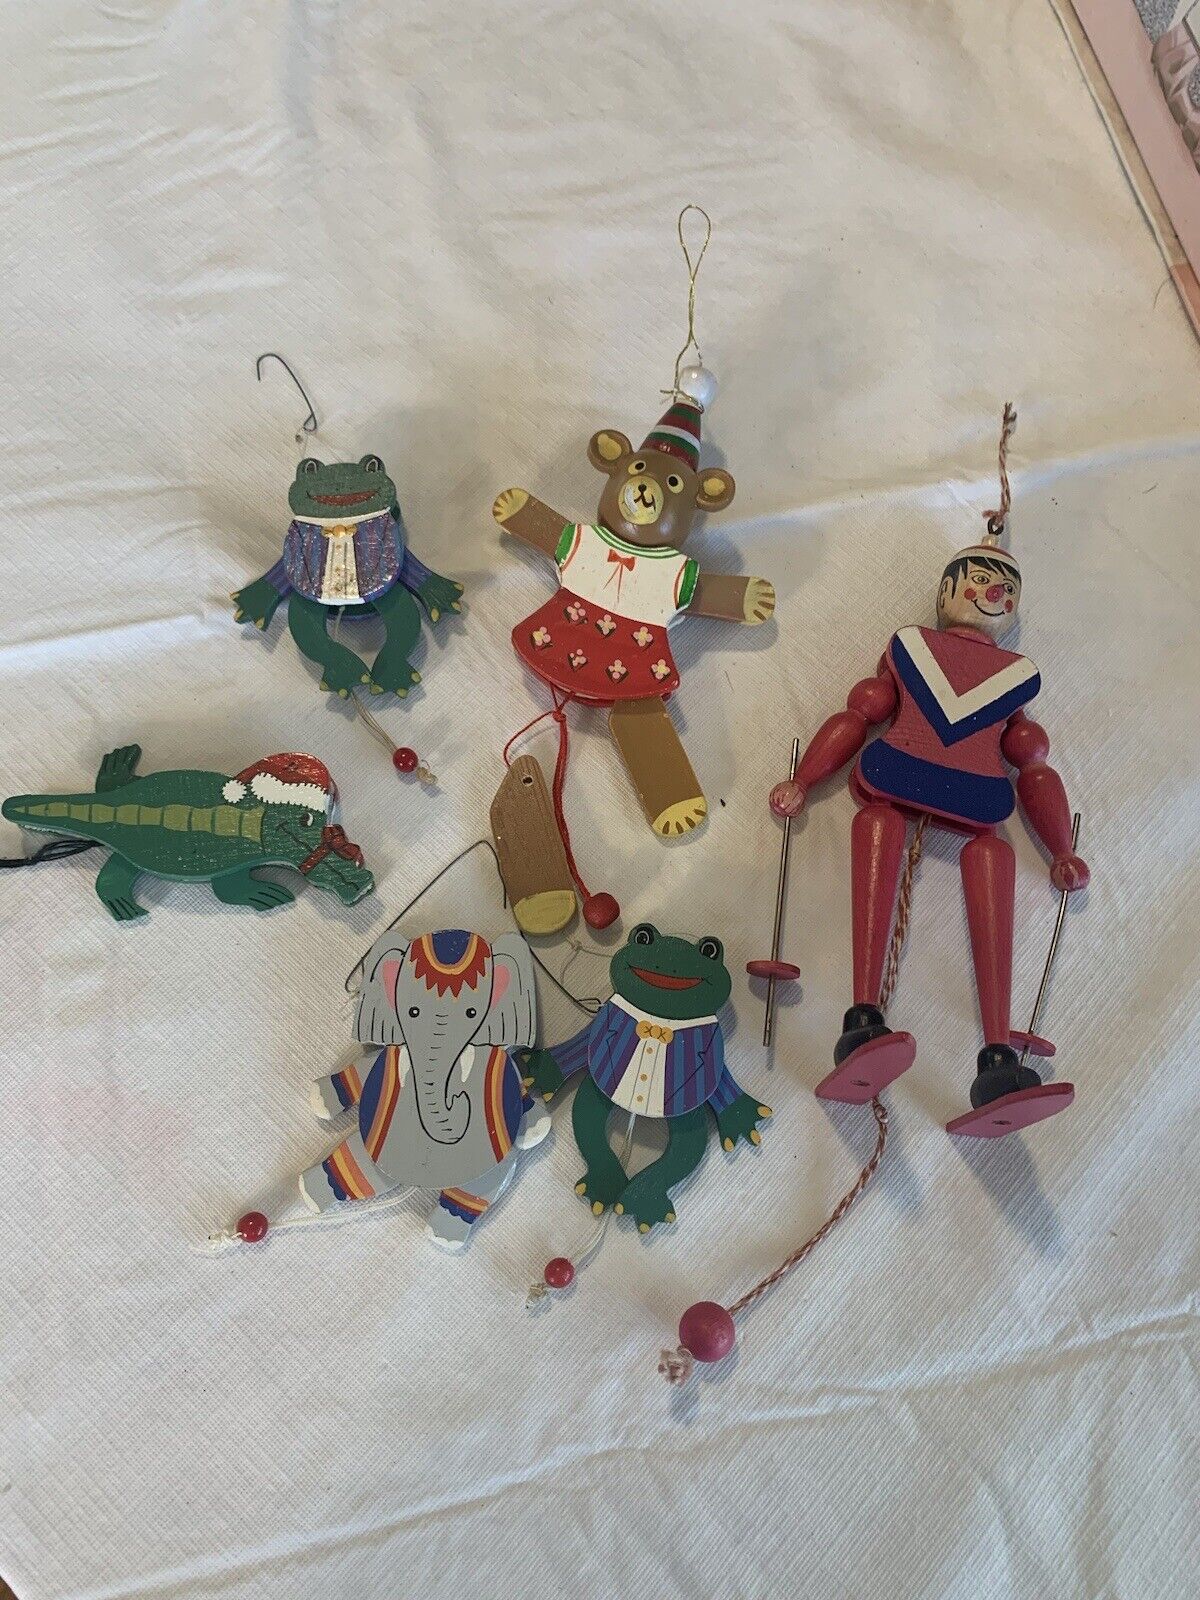 Lot of 6 Vintage Jumping Jack Ornaments, Skier From Austria, Kurt Adler, Animals